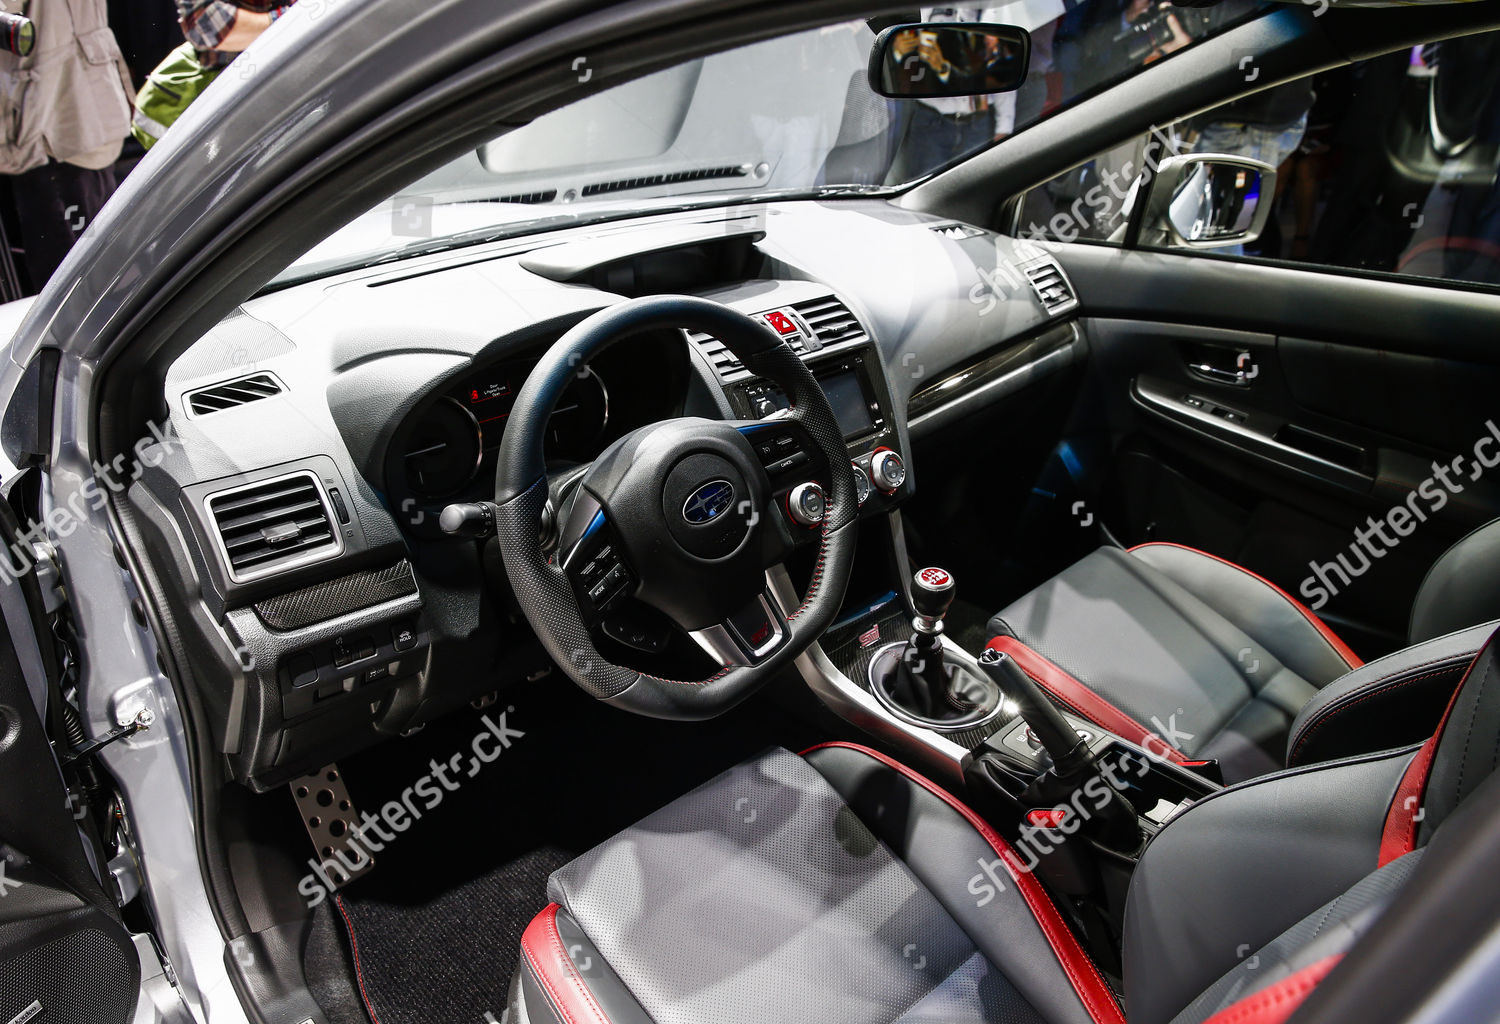 Interior 2015 Subaru Wrx Sti Seen After Editorial Stock